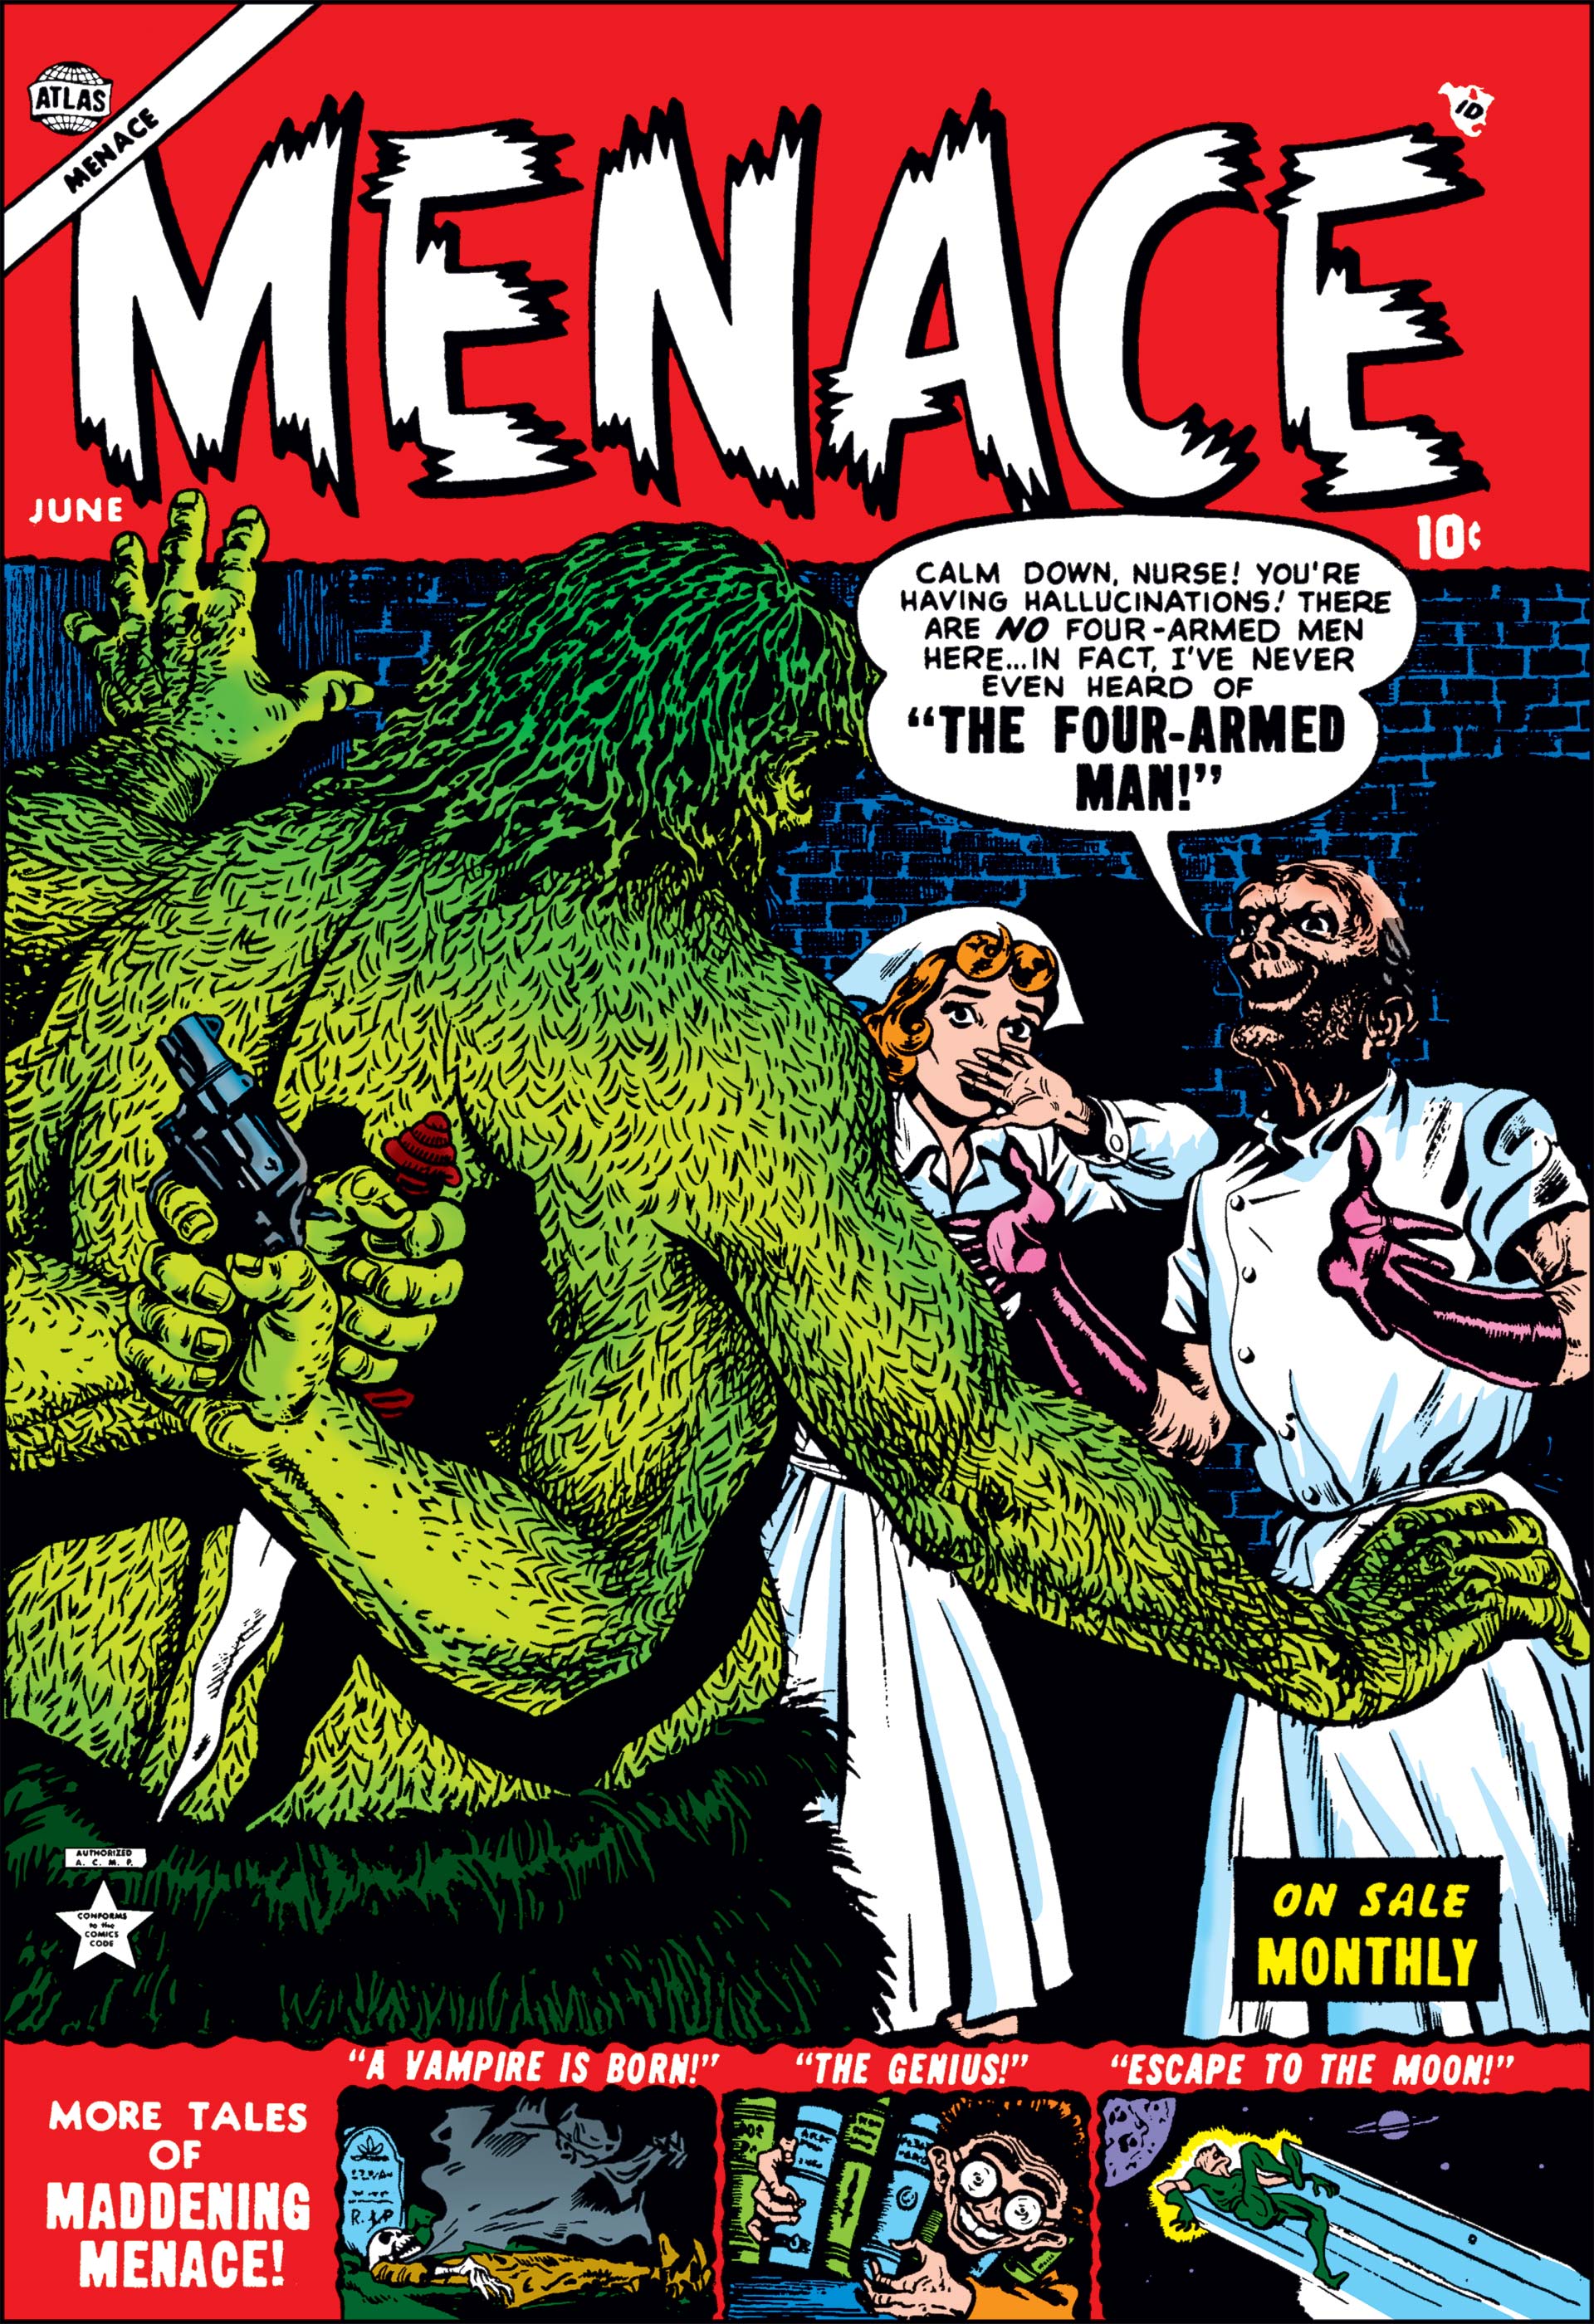 Menace (1953) #4